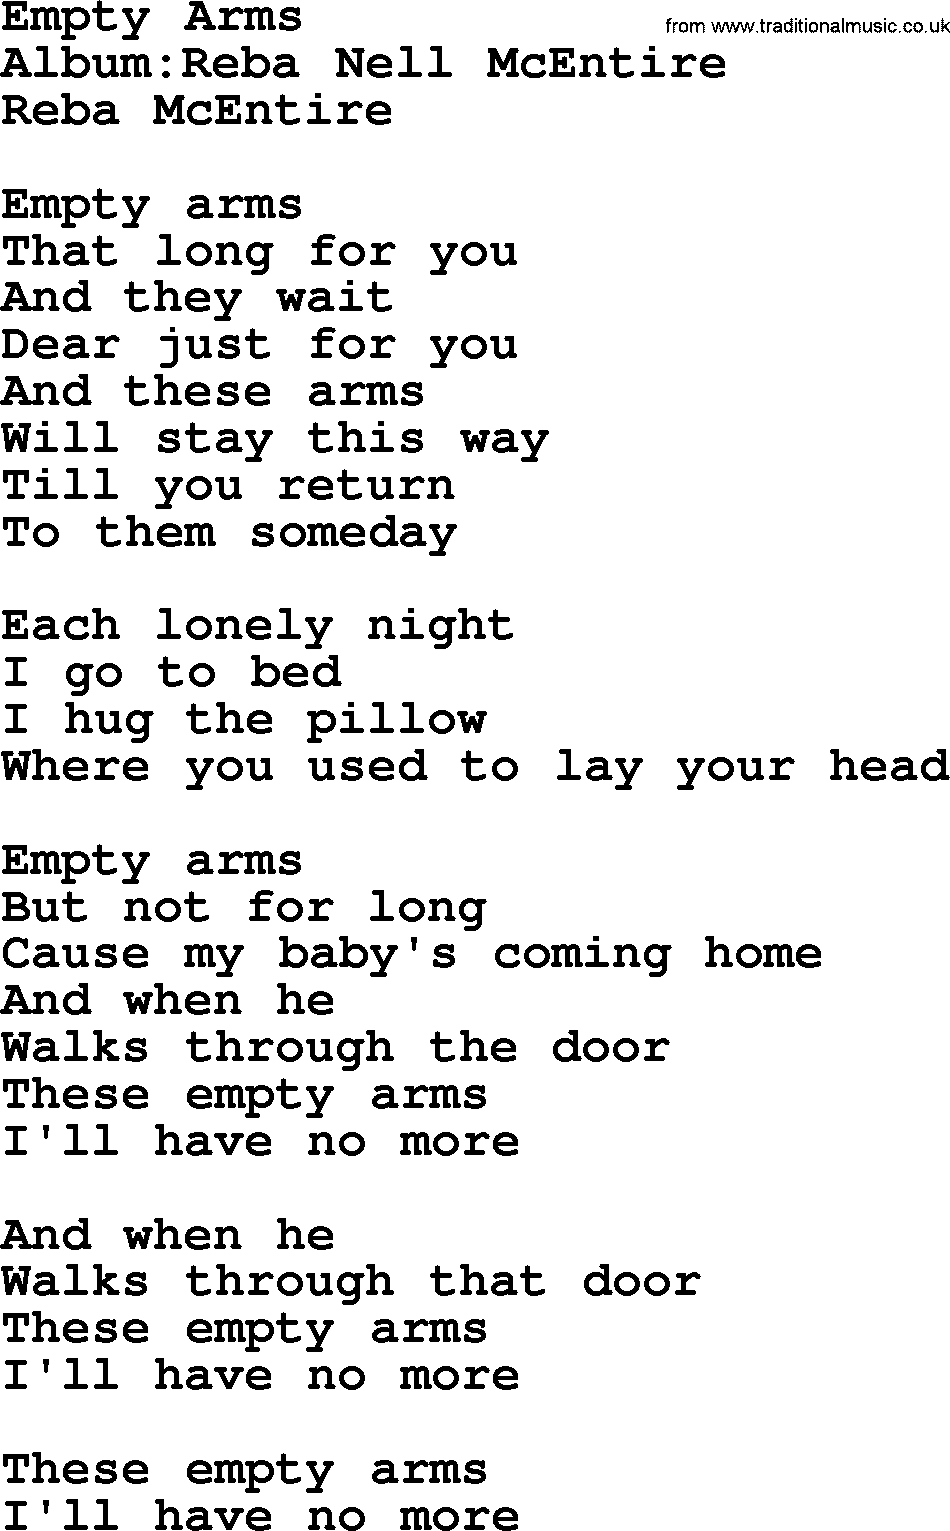 Reba McEntire song: Empty Arms lyrics